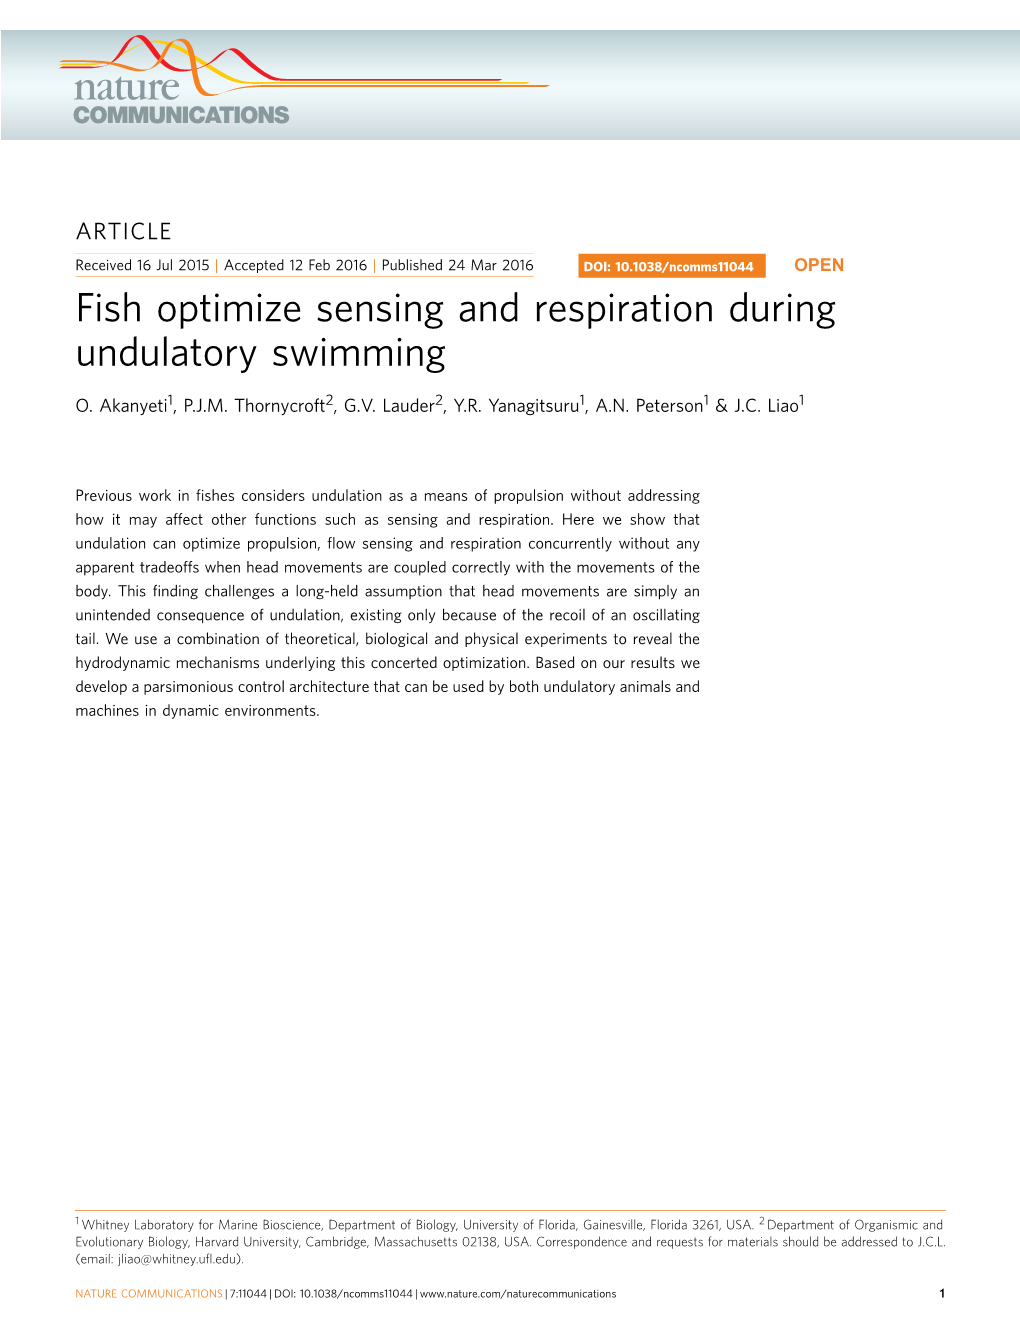 Fish Optimize Sensing and Respiration During Undulatory Swimming